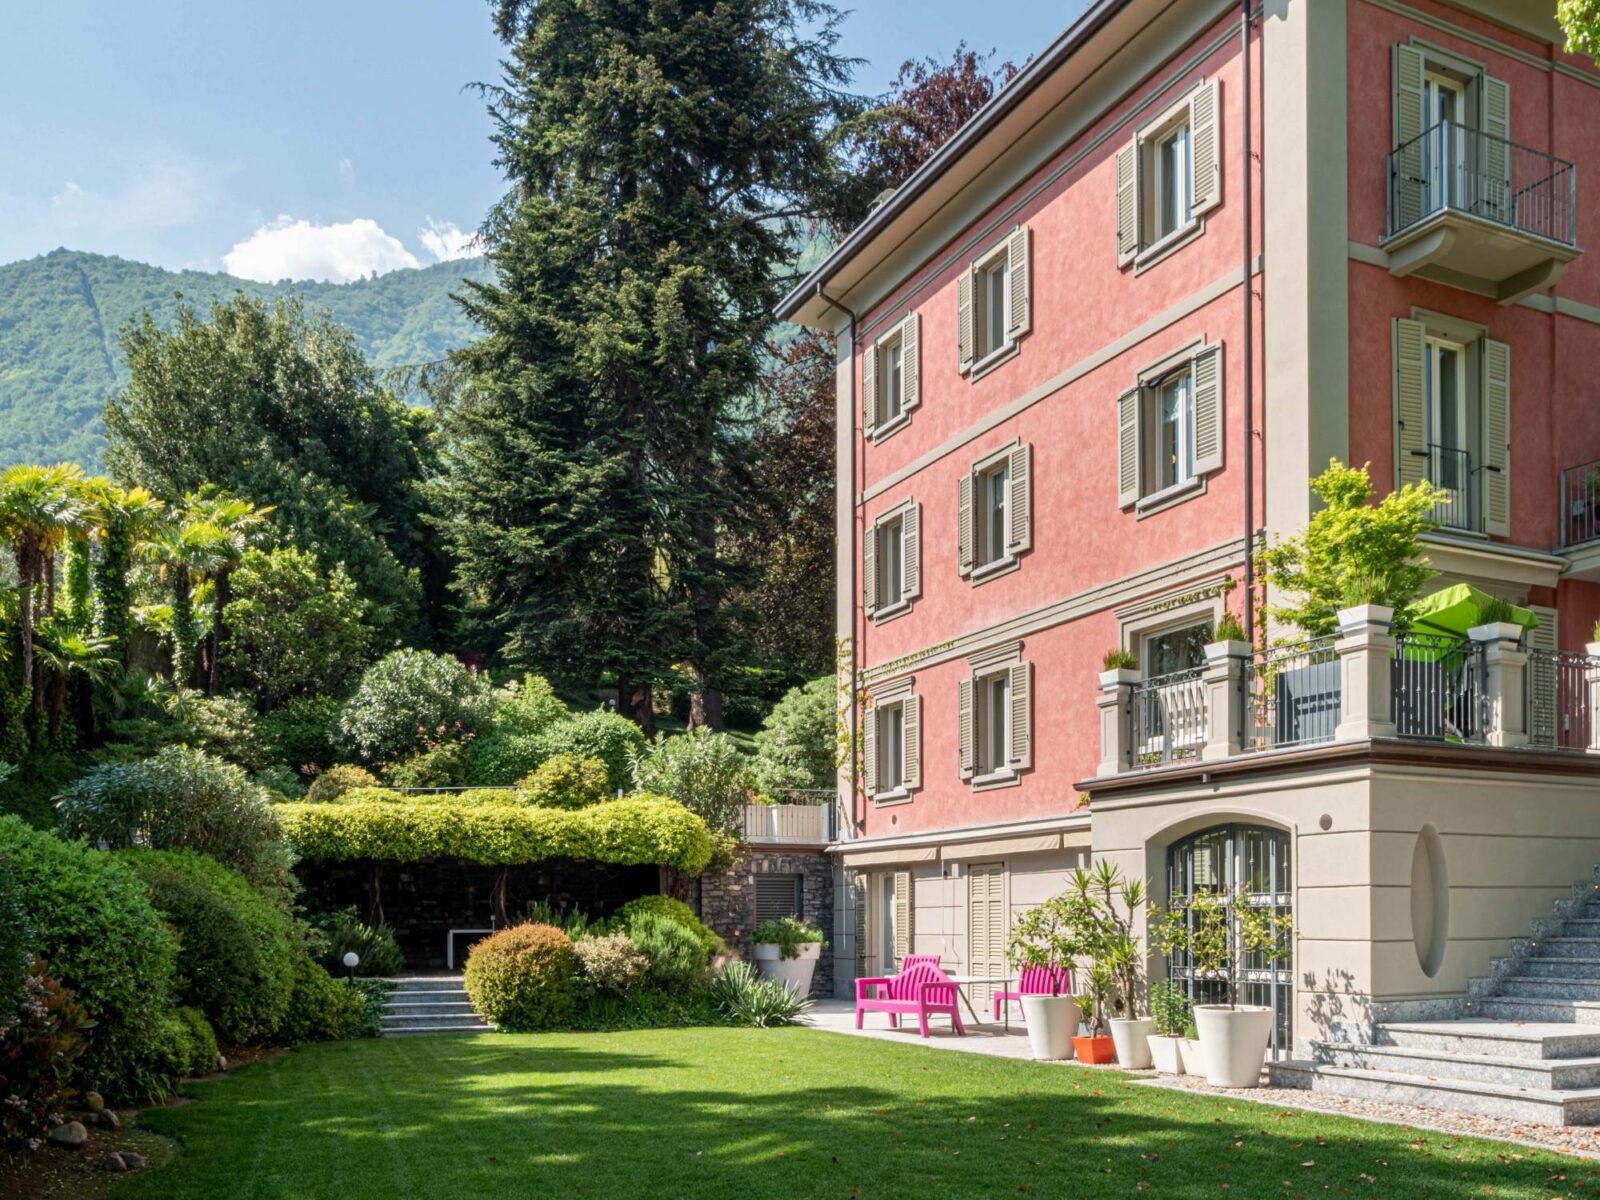 Francis York 2 Restored Italian Villa in Tremezzina, Lake Como 8.jpg